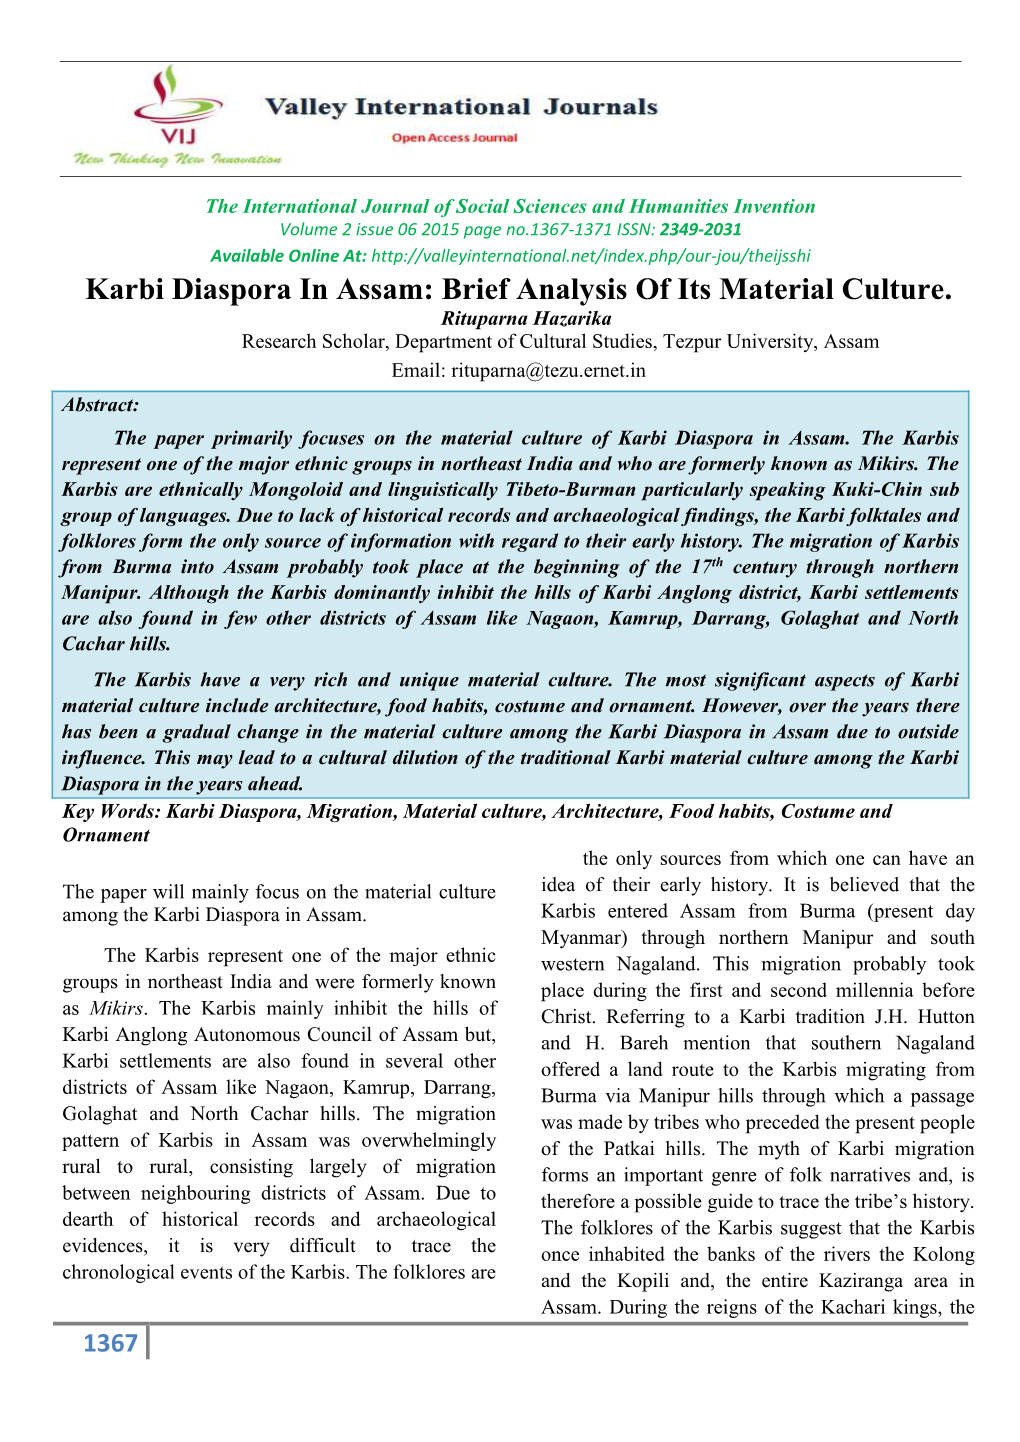 Karbi Diaspora in Assam: Brief Analysis of Its Material Culture